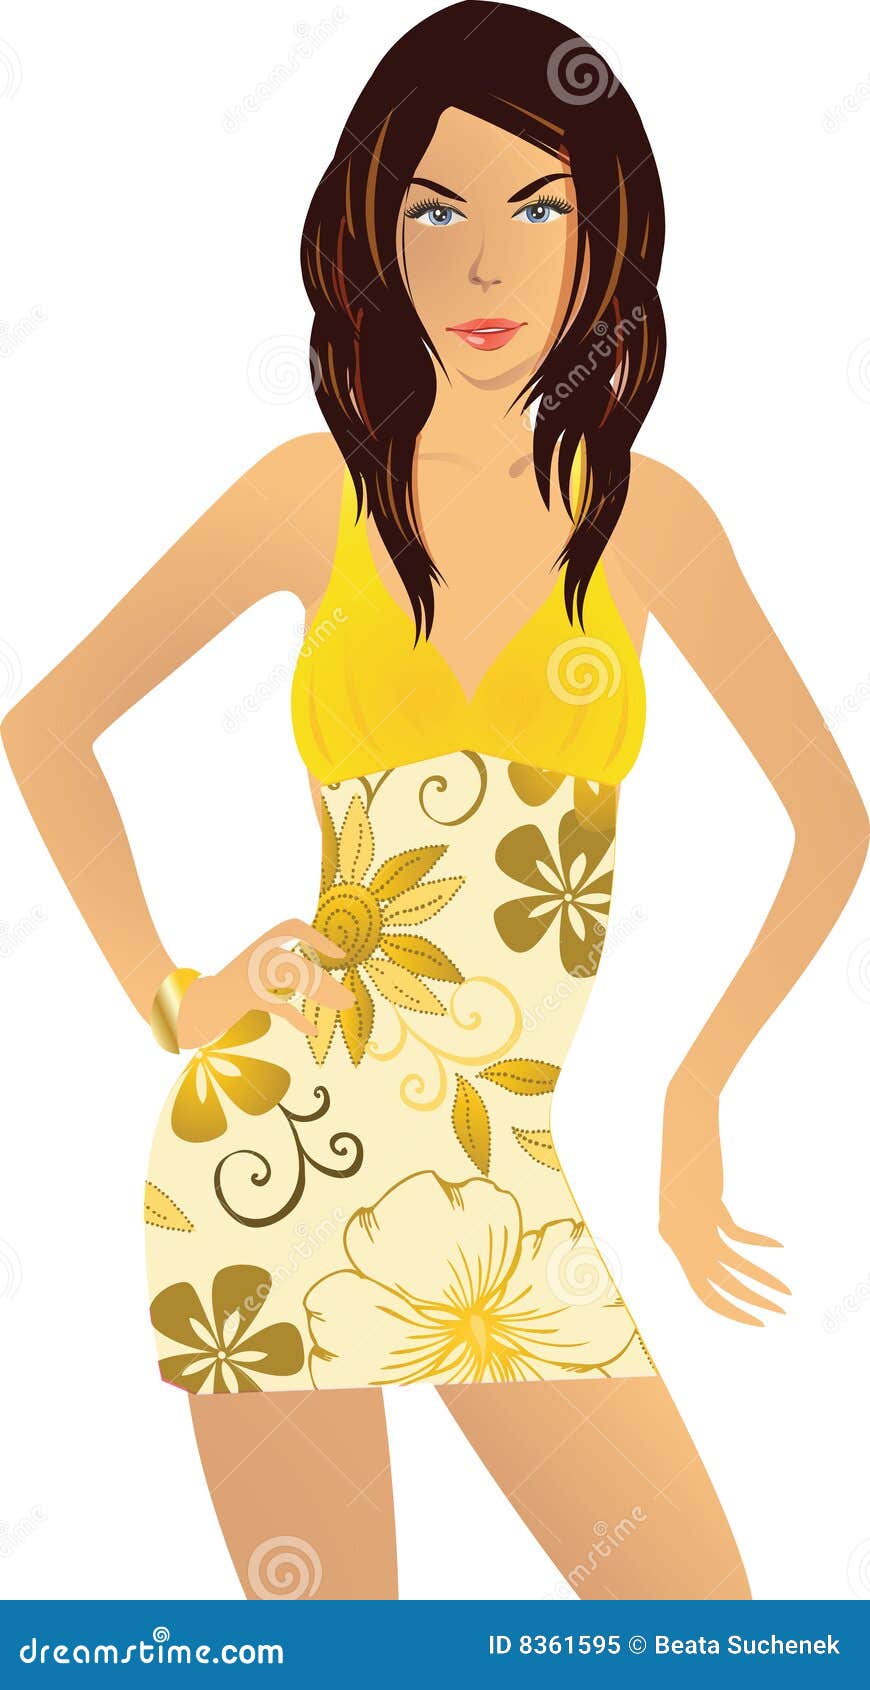 Woman Yellow Dress Illustration Royalty Free Stock Photo 